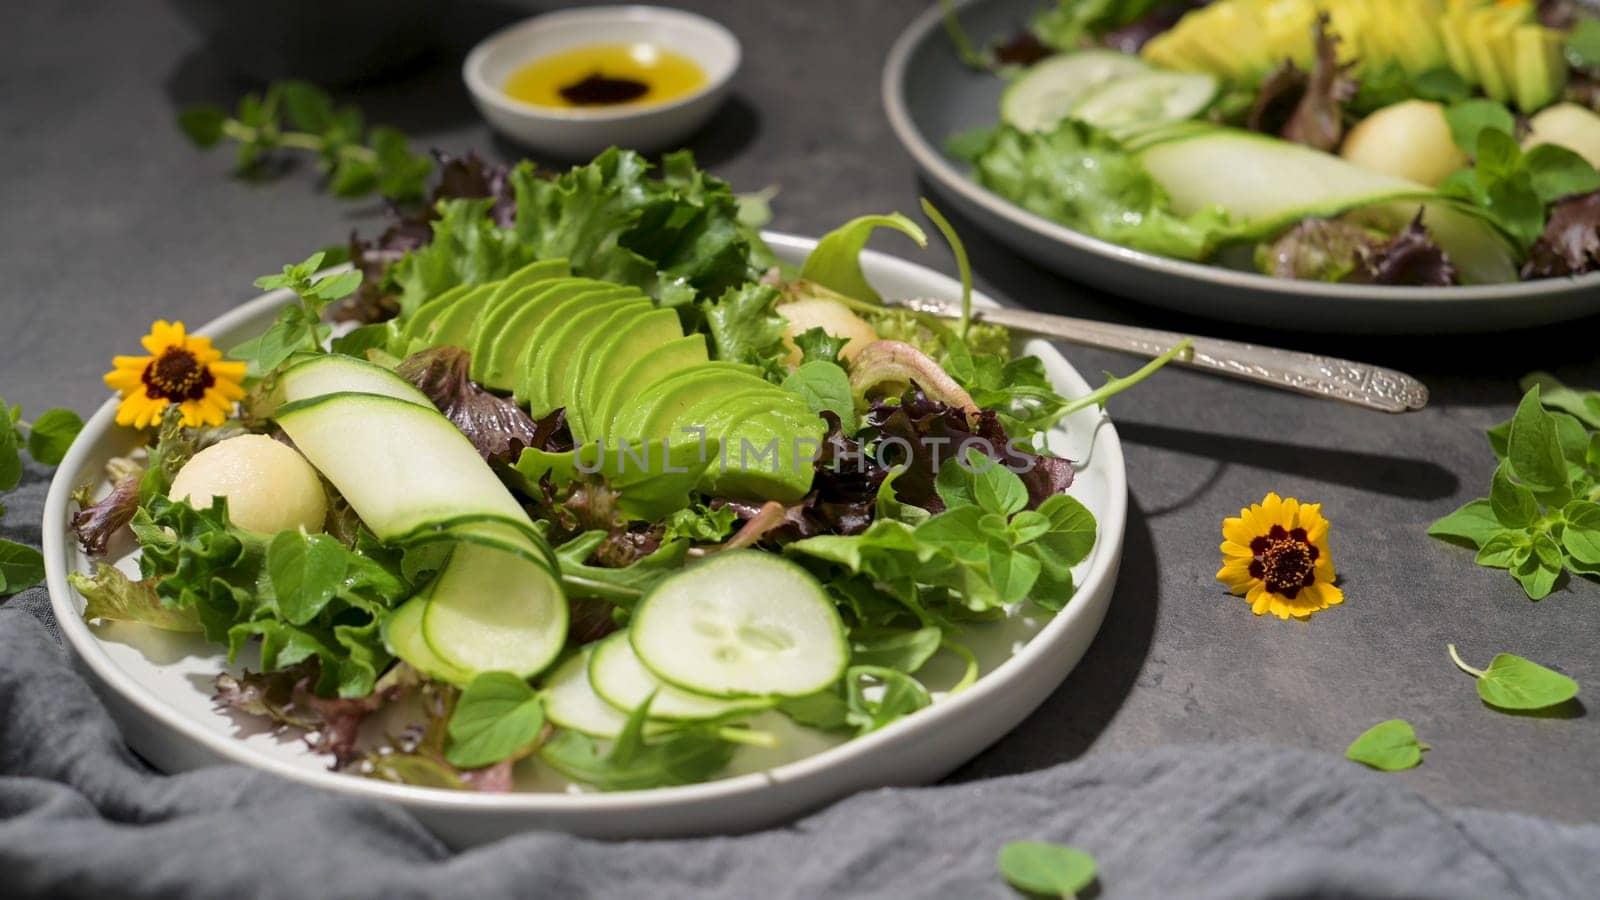 Fresh summer salad with cucumber, melon, avocado and fresh oregano served on ceramic plates.